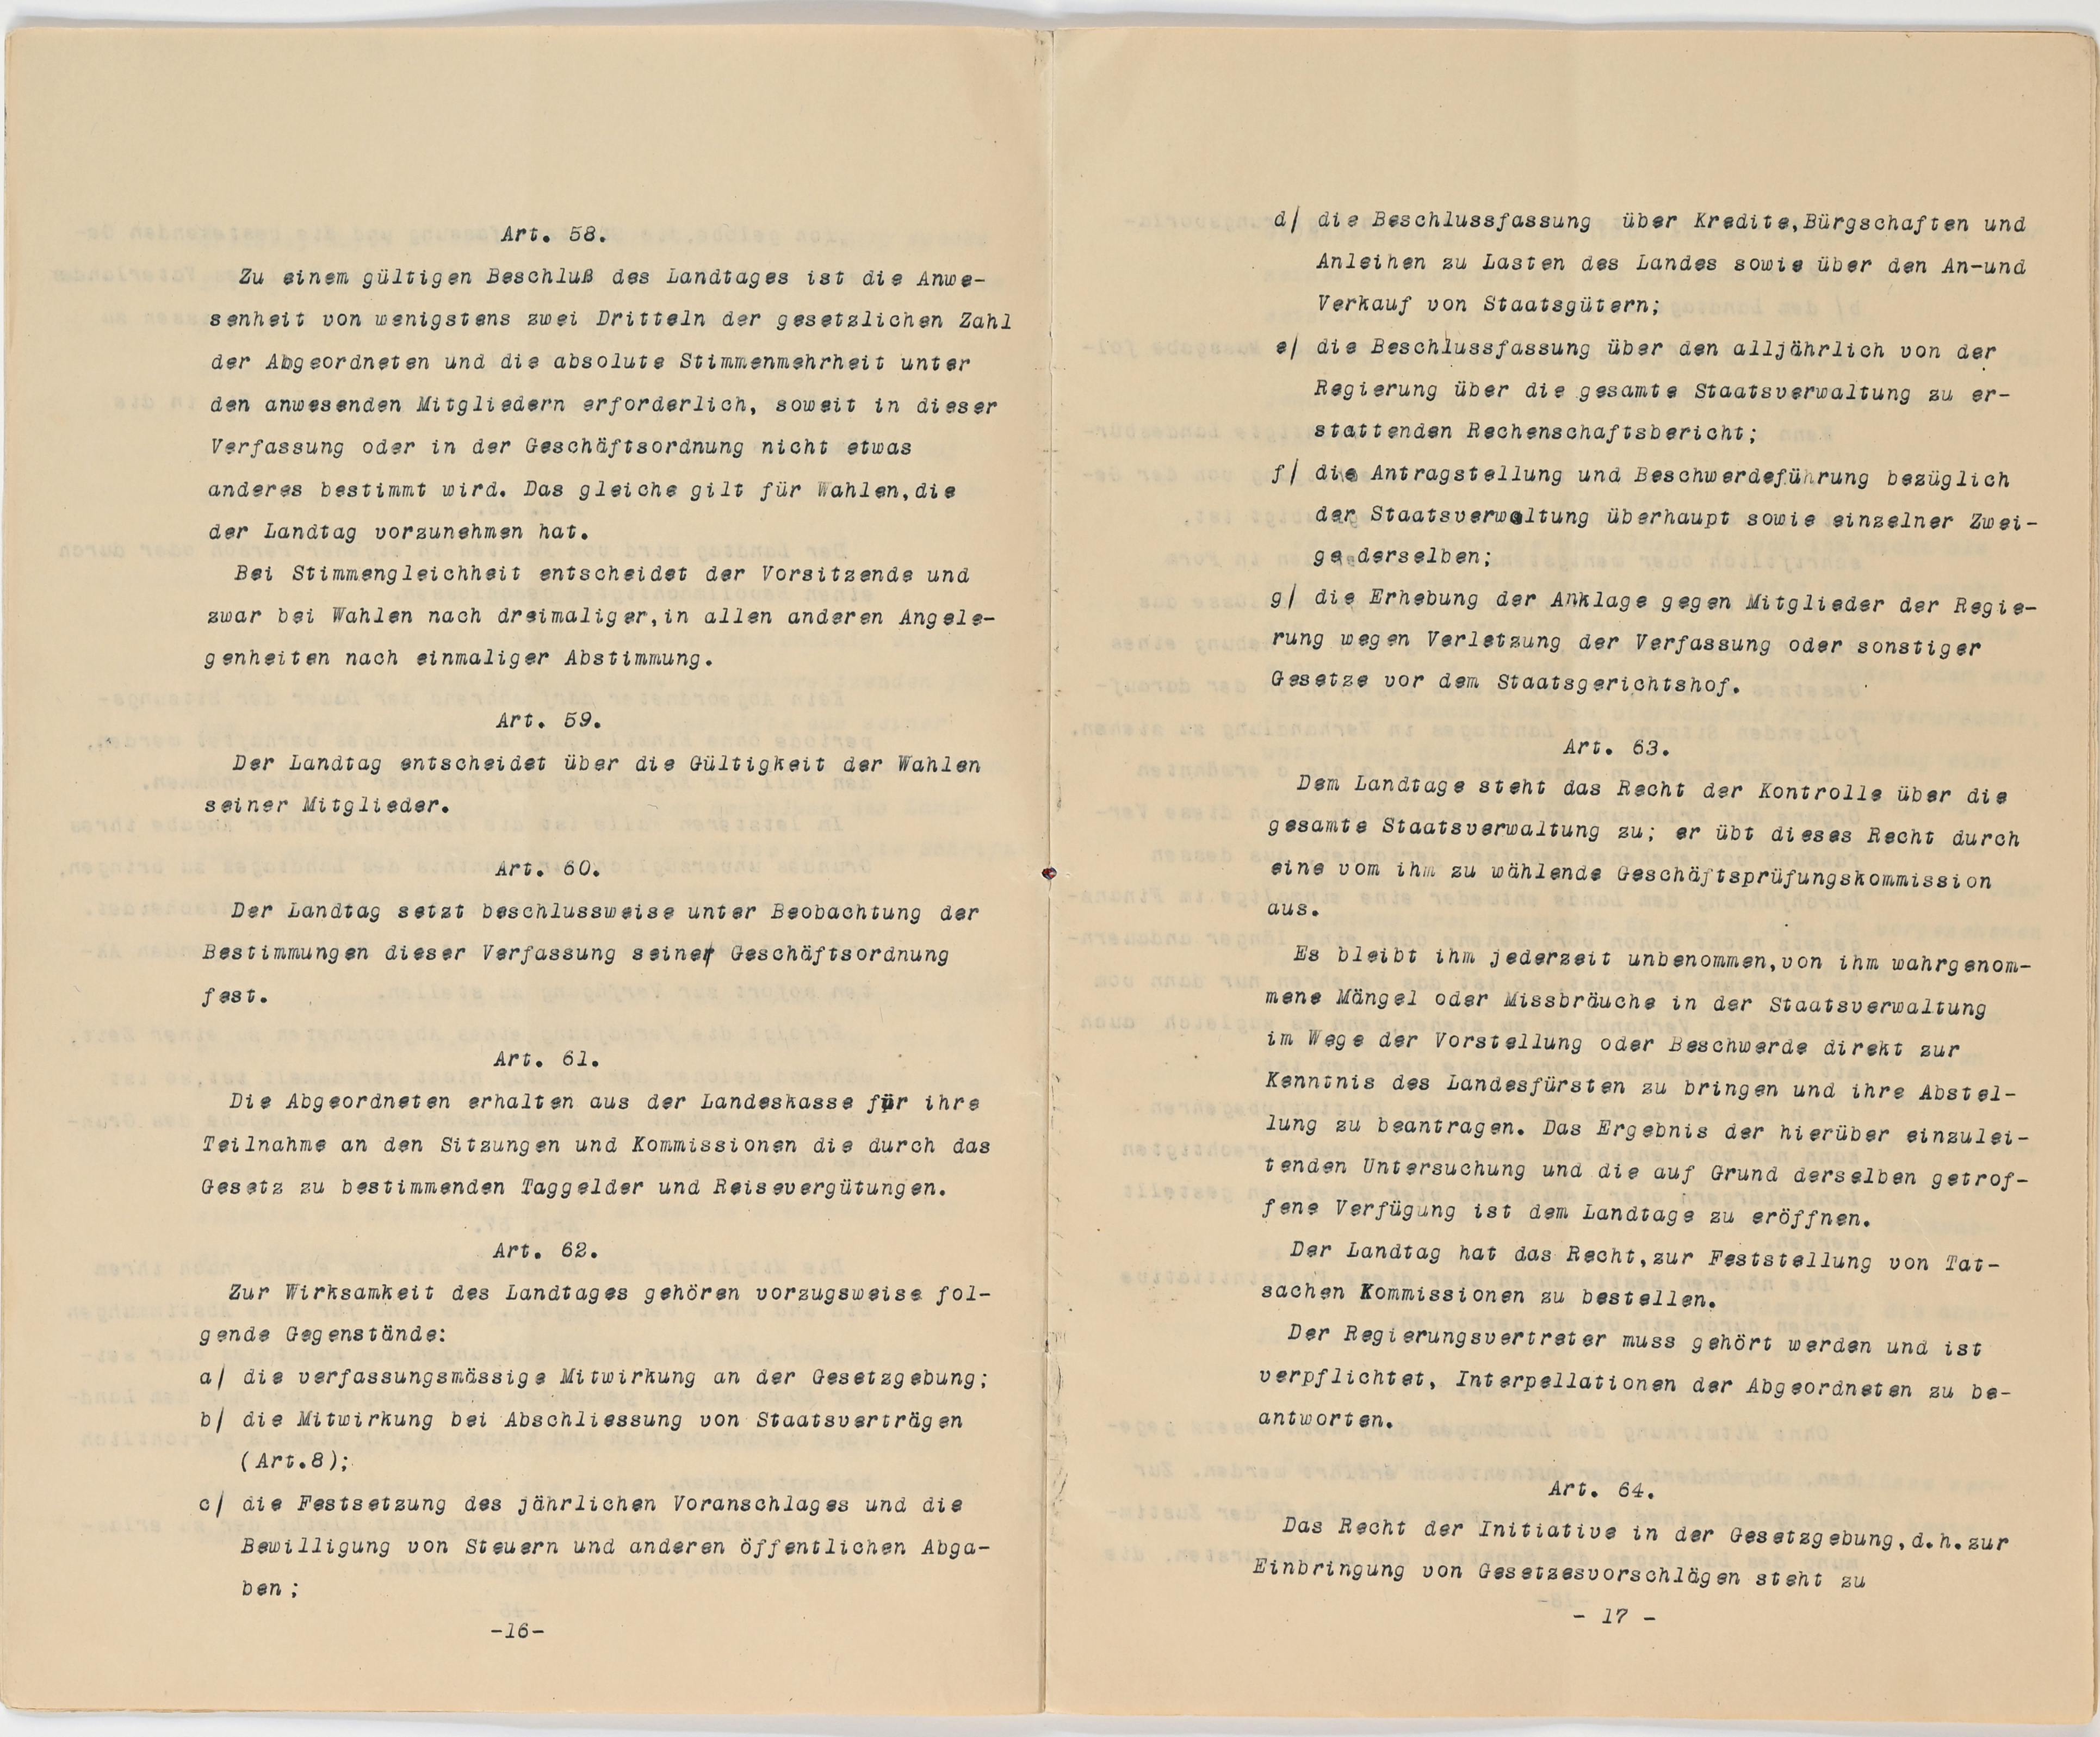 Verfassung 1921 Art. 58 bis Art. 64